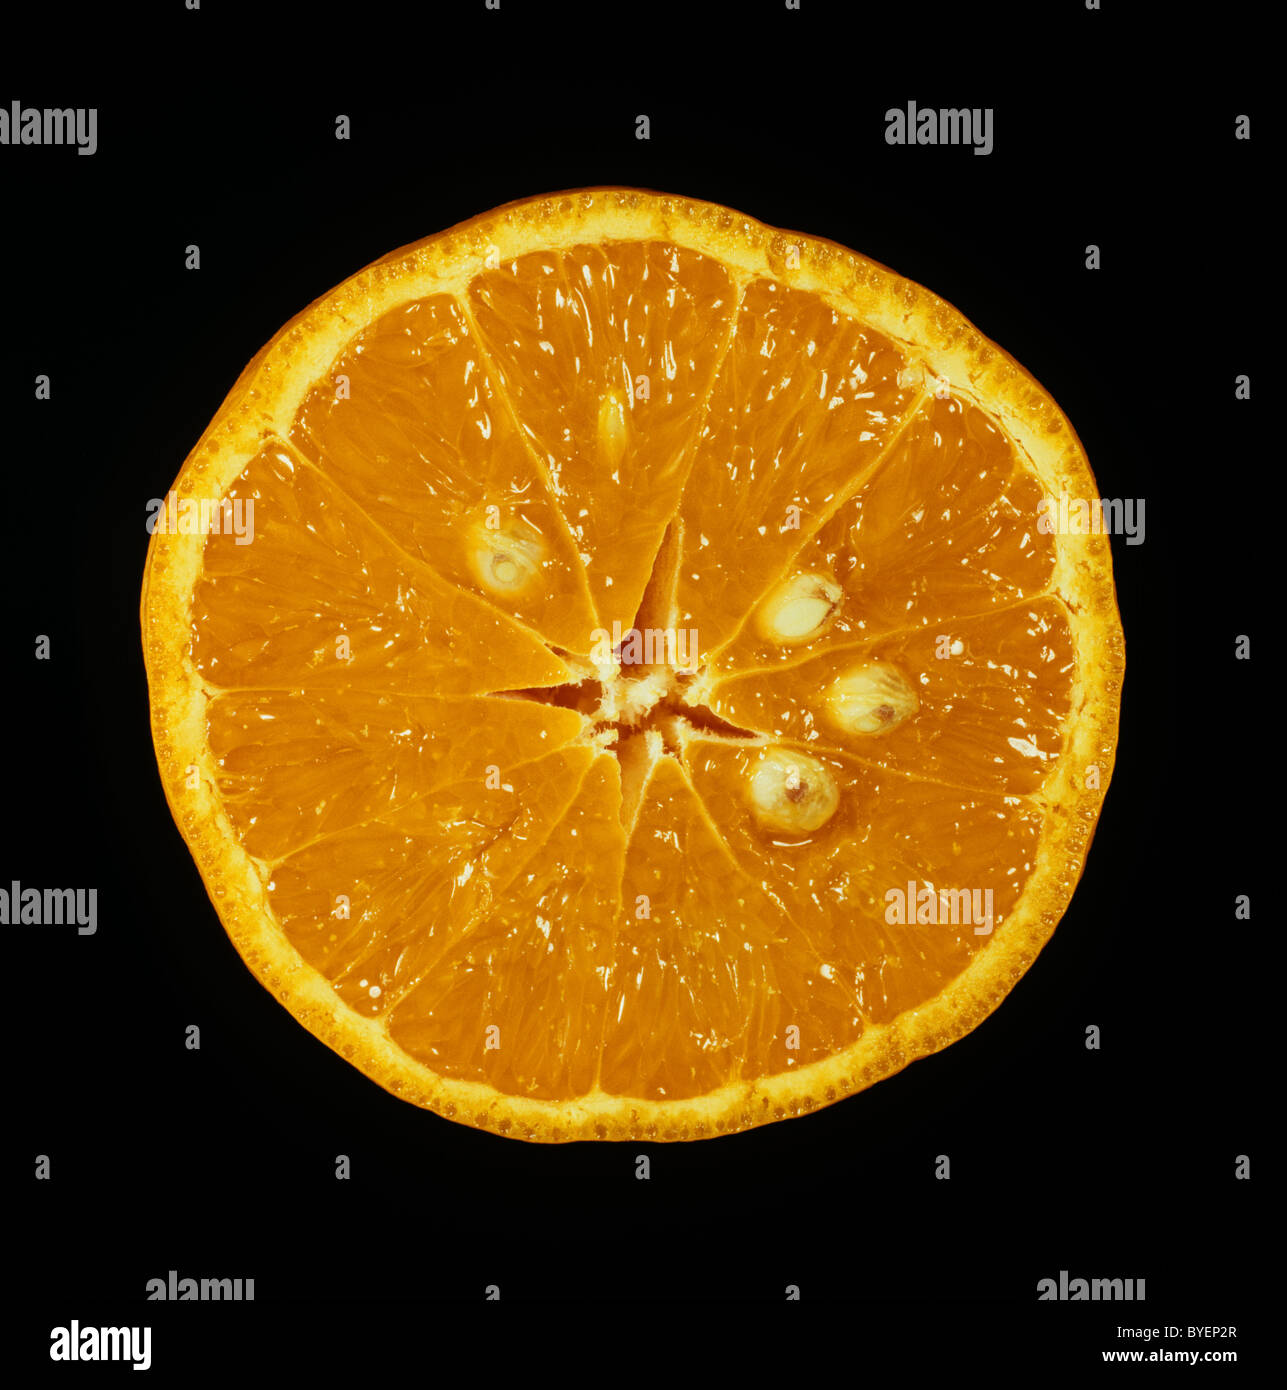 Schnittfläche verschiedener Zitrusfrüchte Mandarin Kara Stockfoto